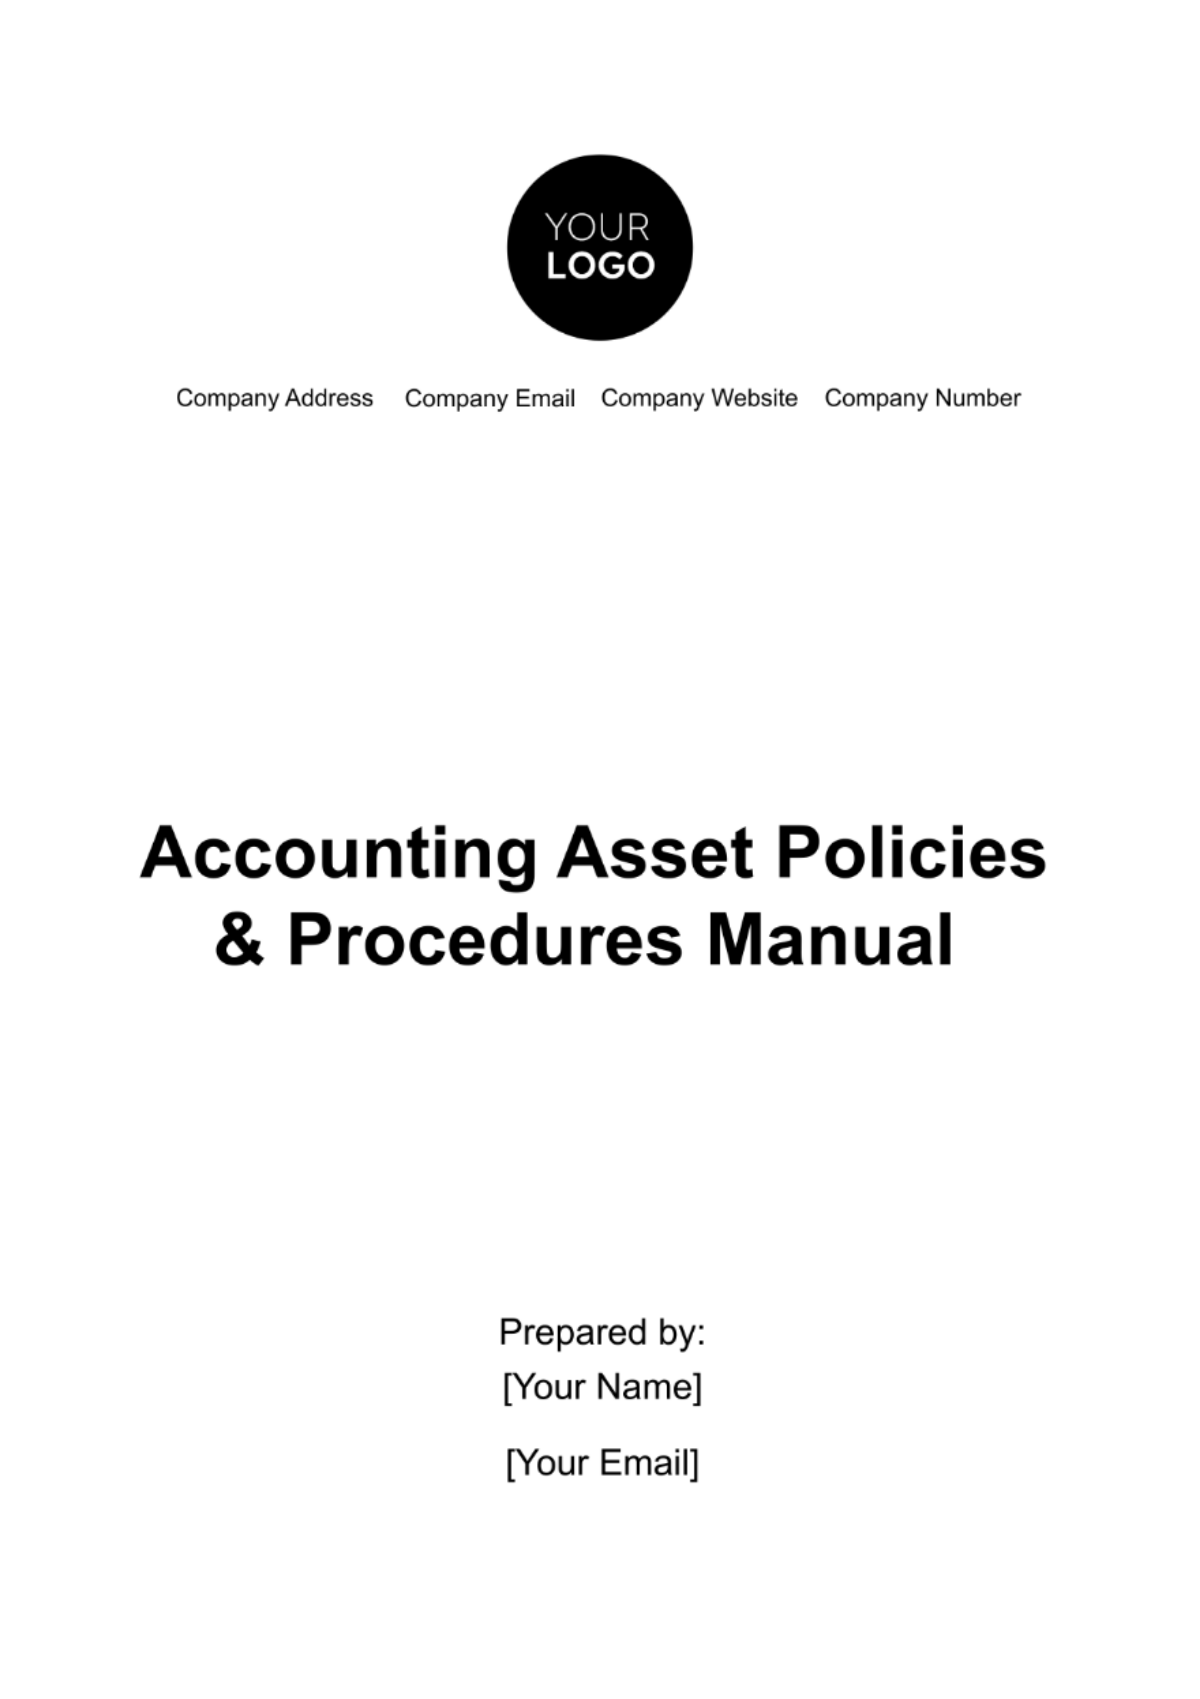 Accounting Asset Policies & Procedures Manual Template